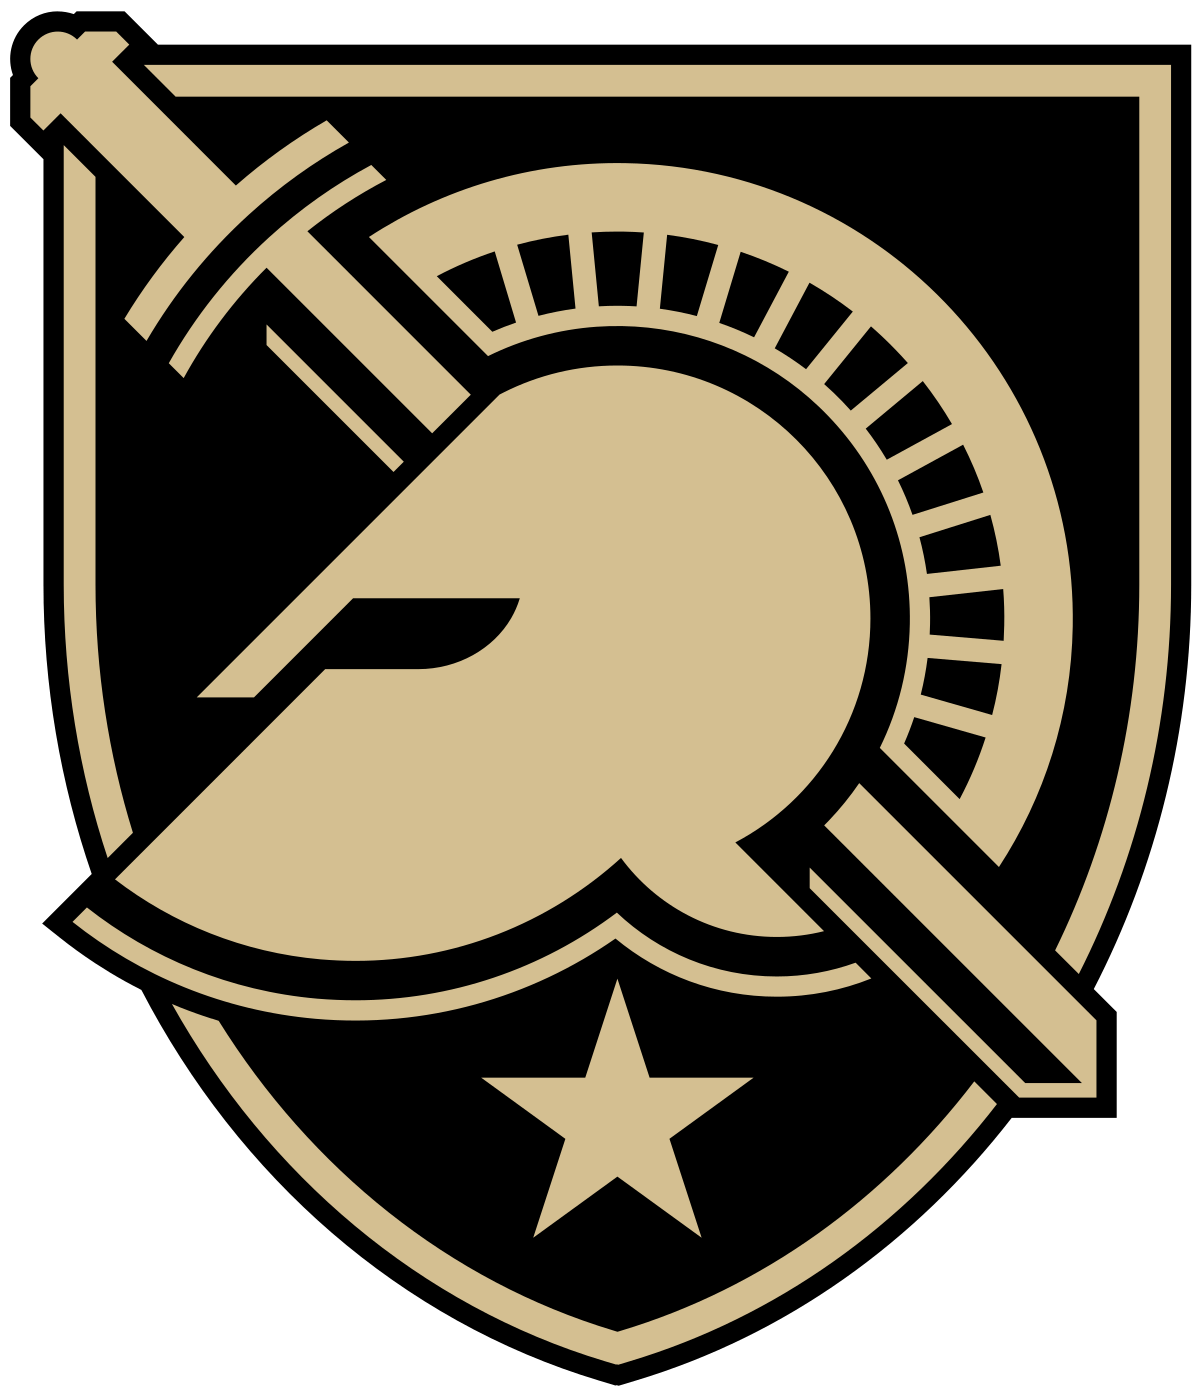 Gold and Black Knights Logo - Army Black Knights